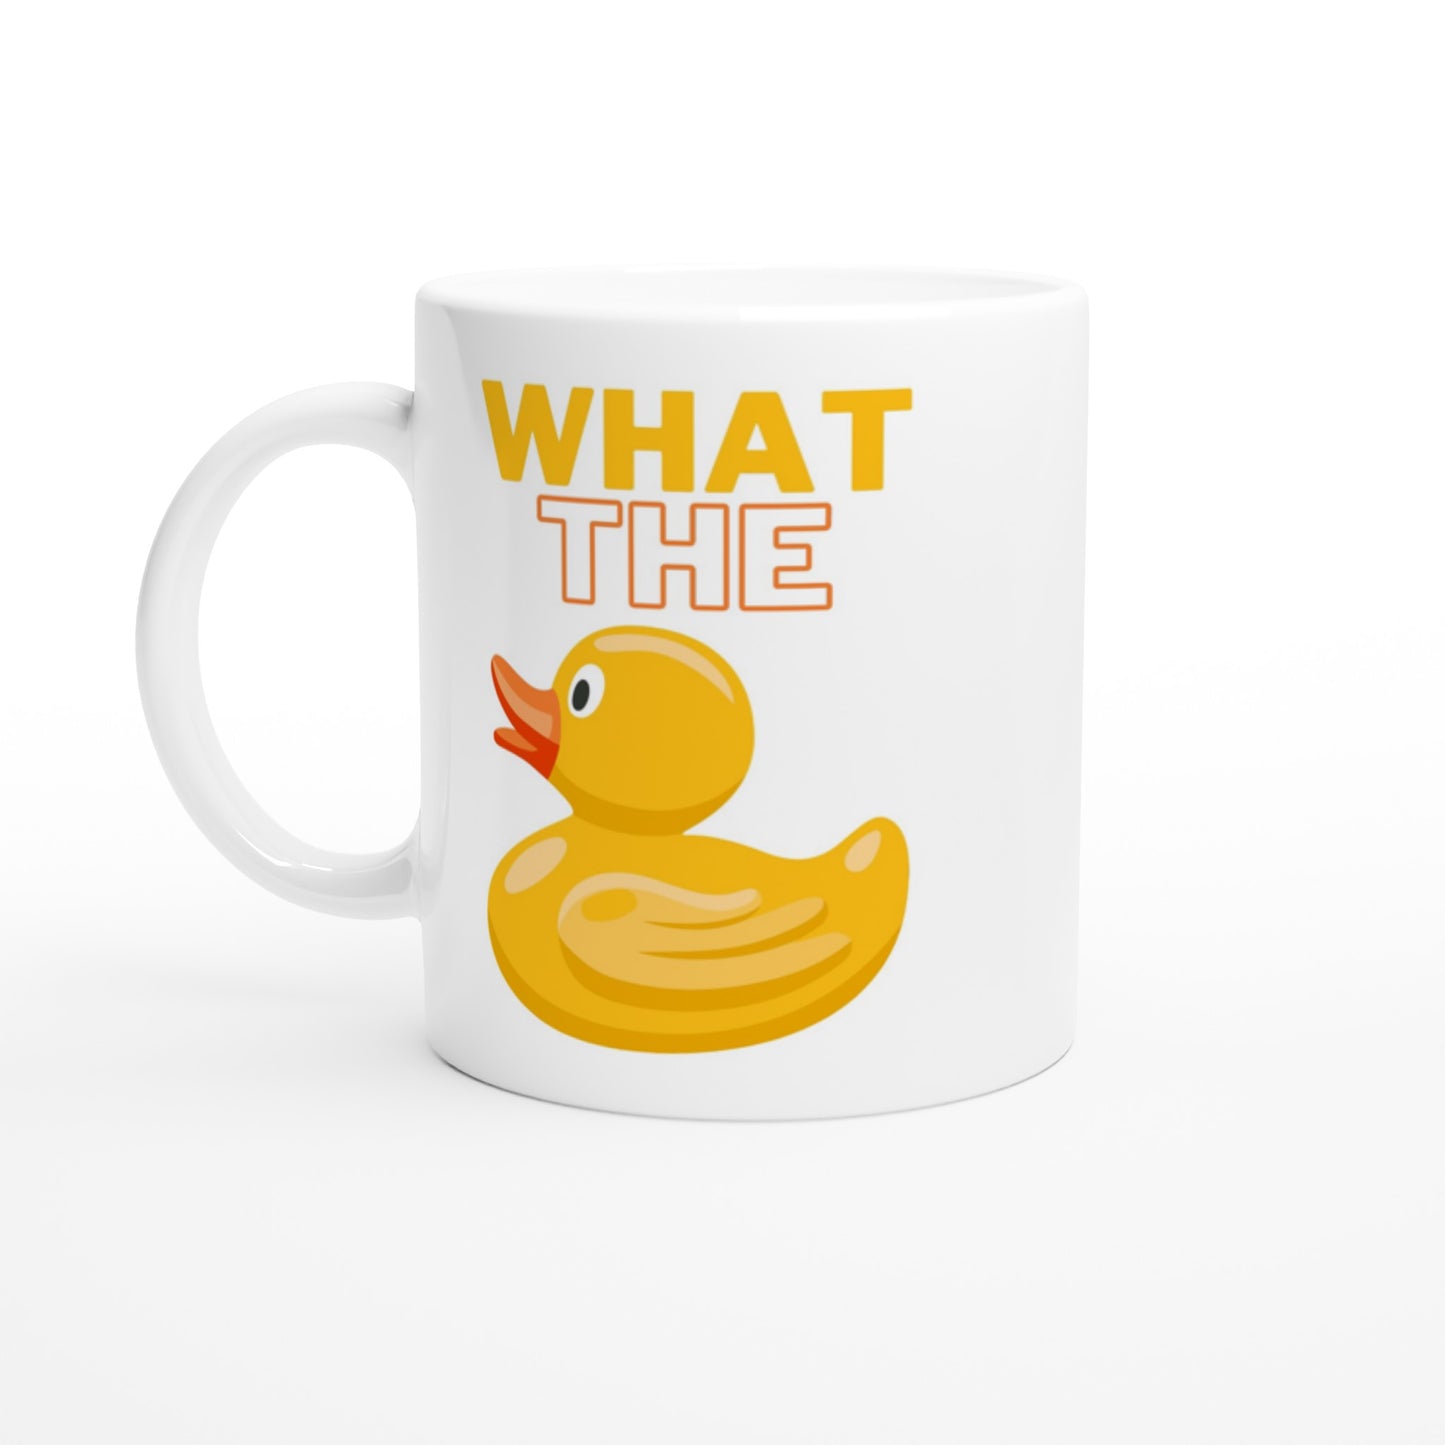 What the duck. Novelty coffee mug.